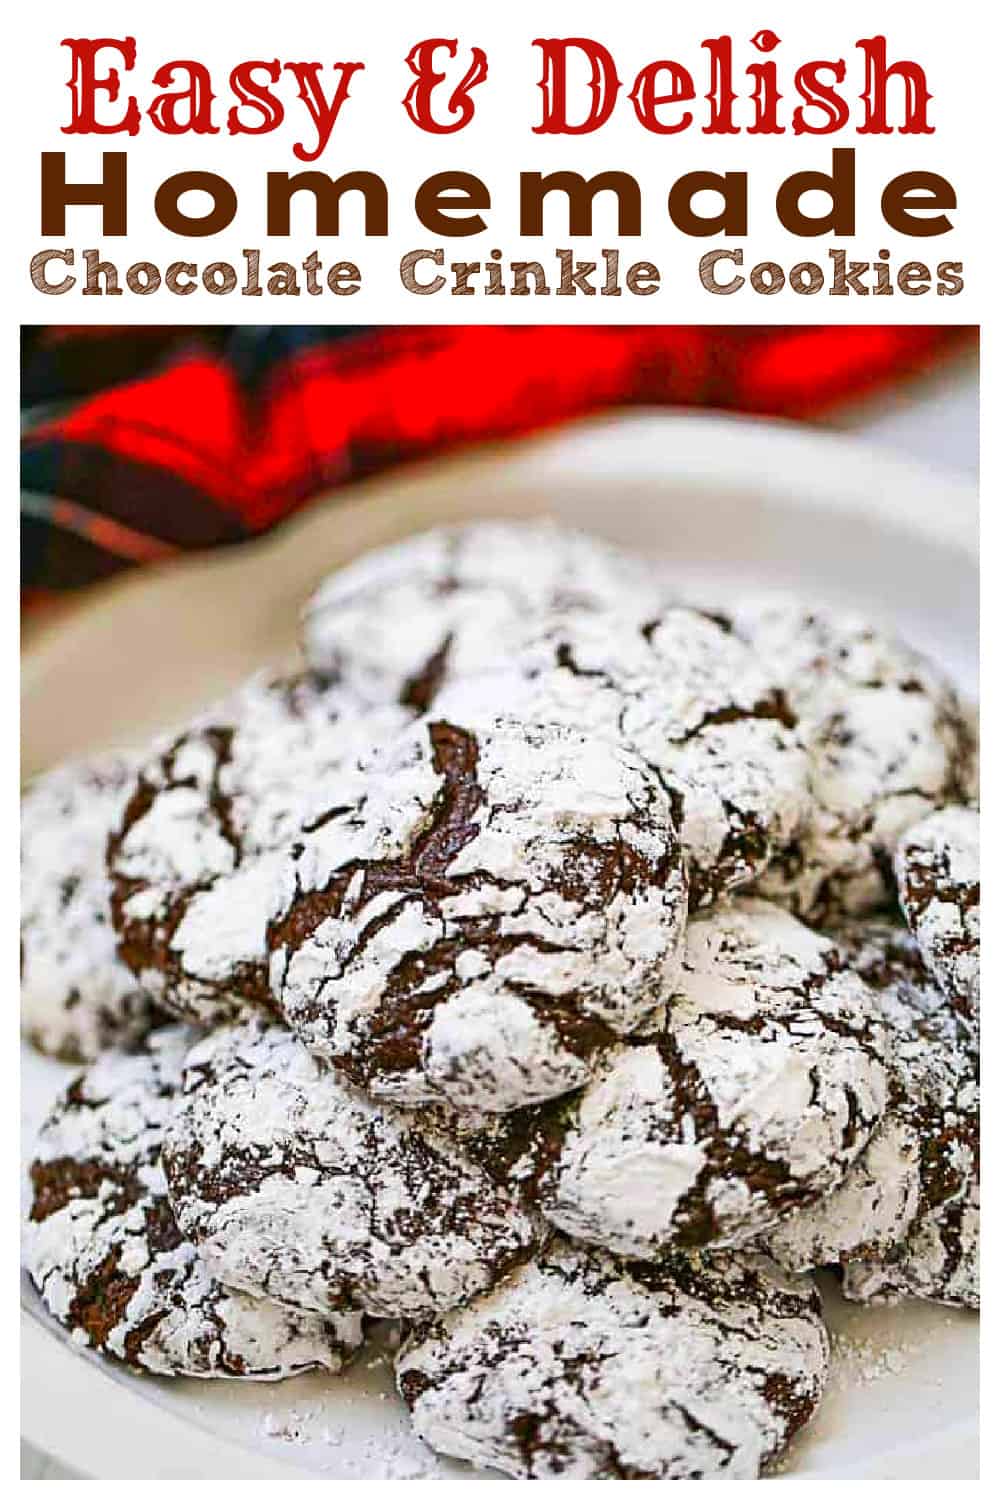 Homemade Chocolate Crinkle Cookies